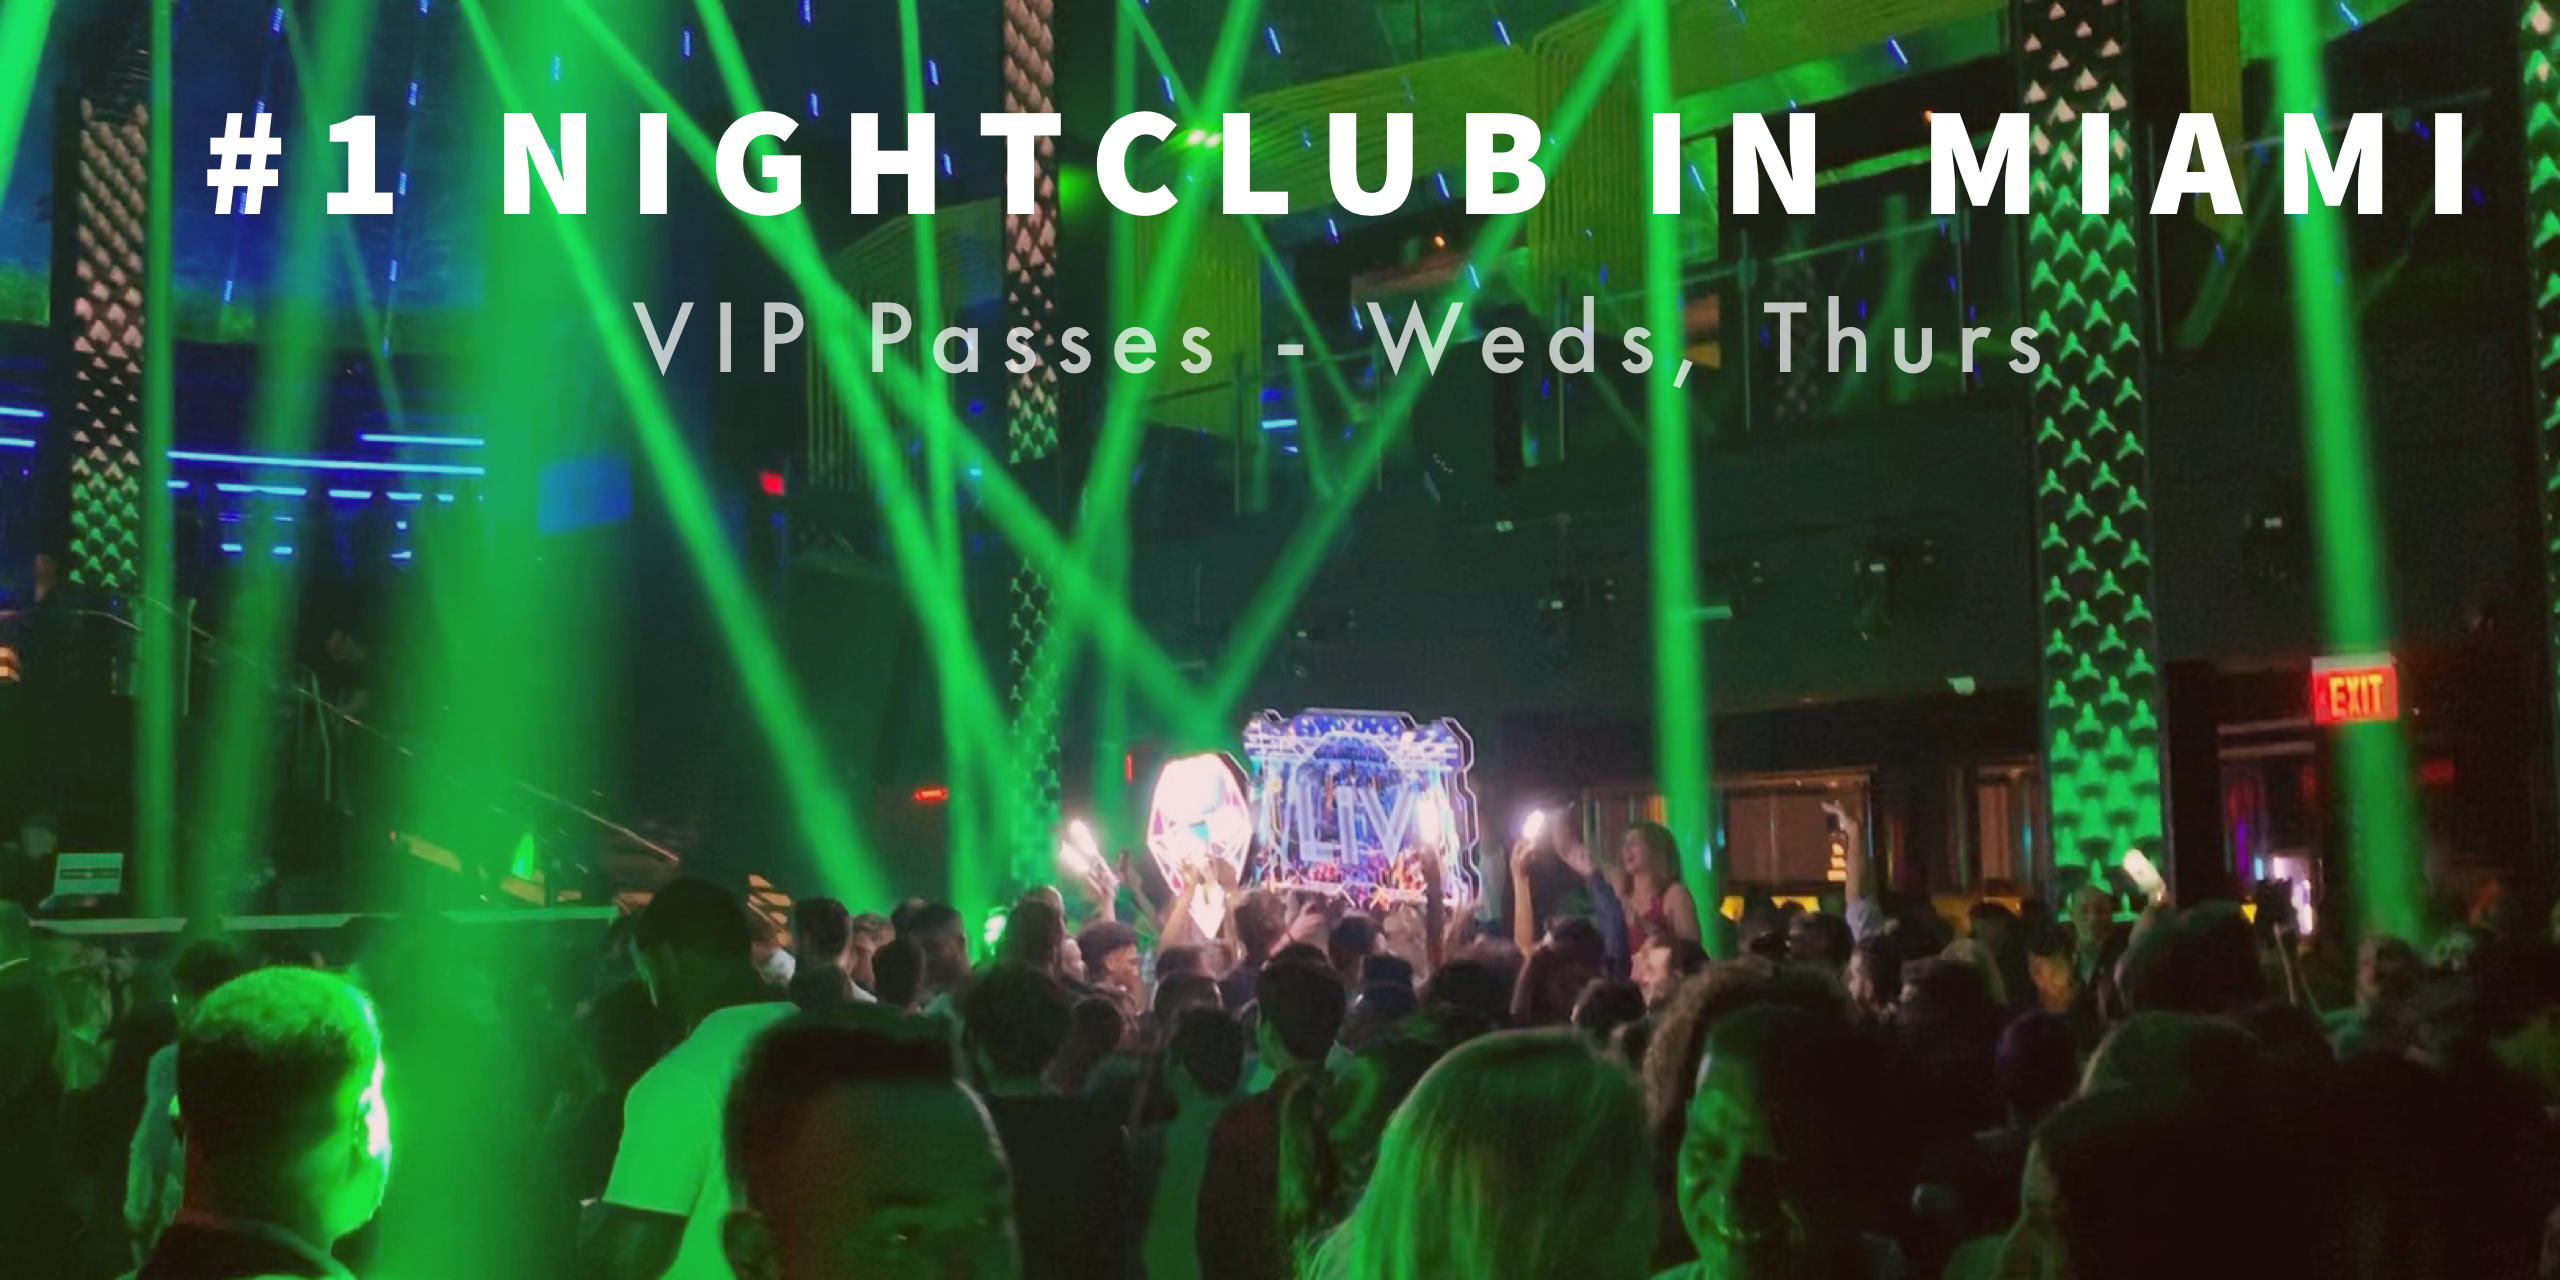 Miami Beach Nightclub VIP Party Ticket to #1 Nightclub